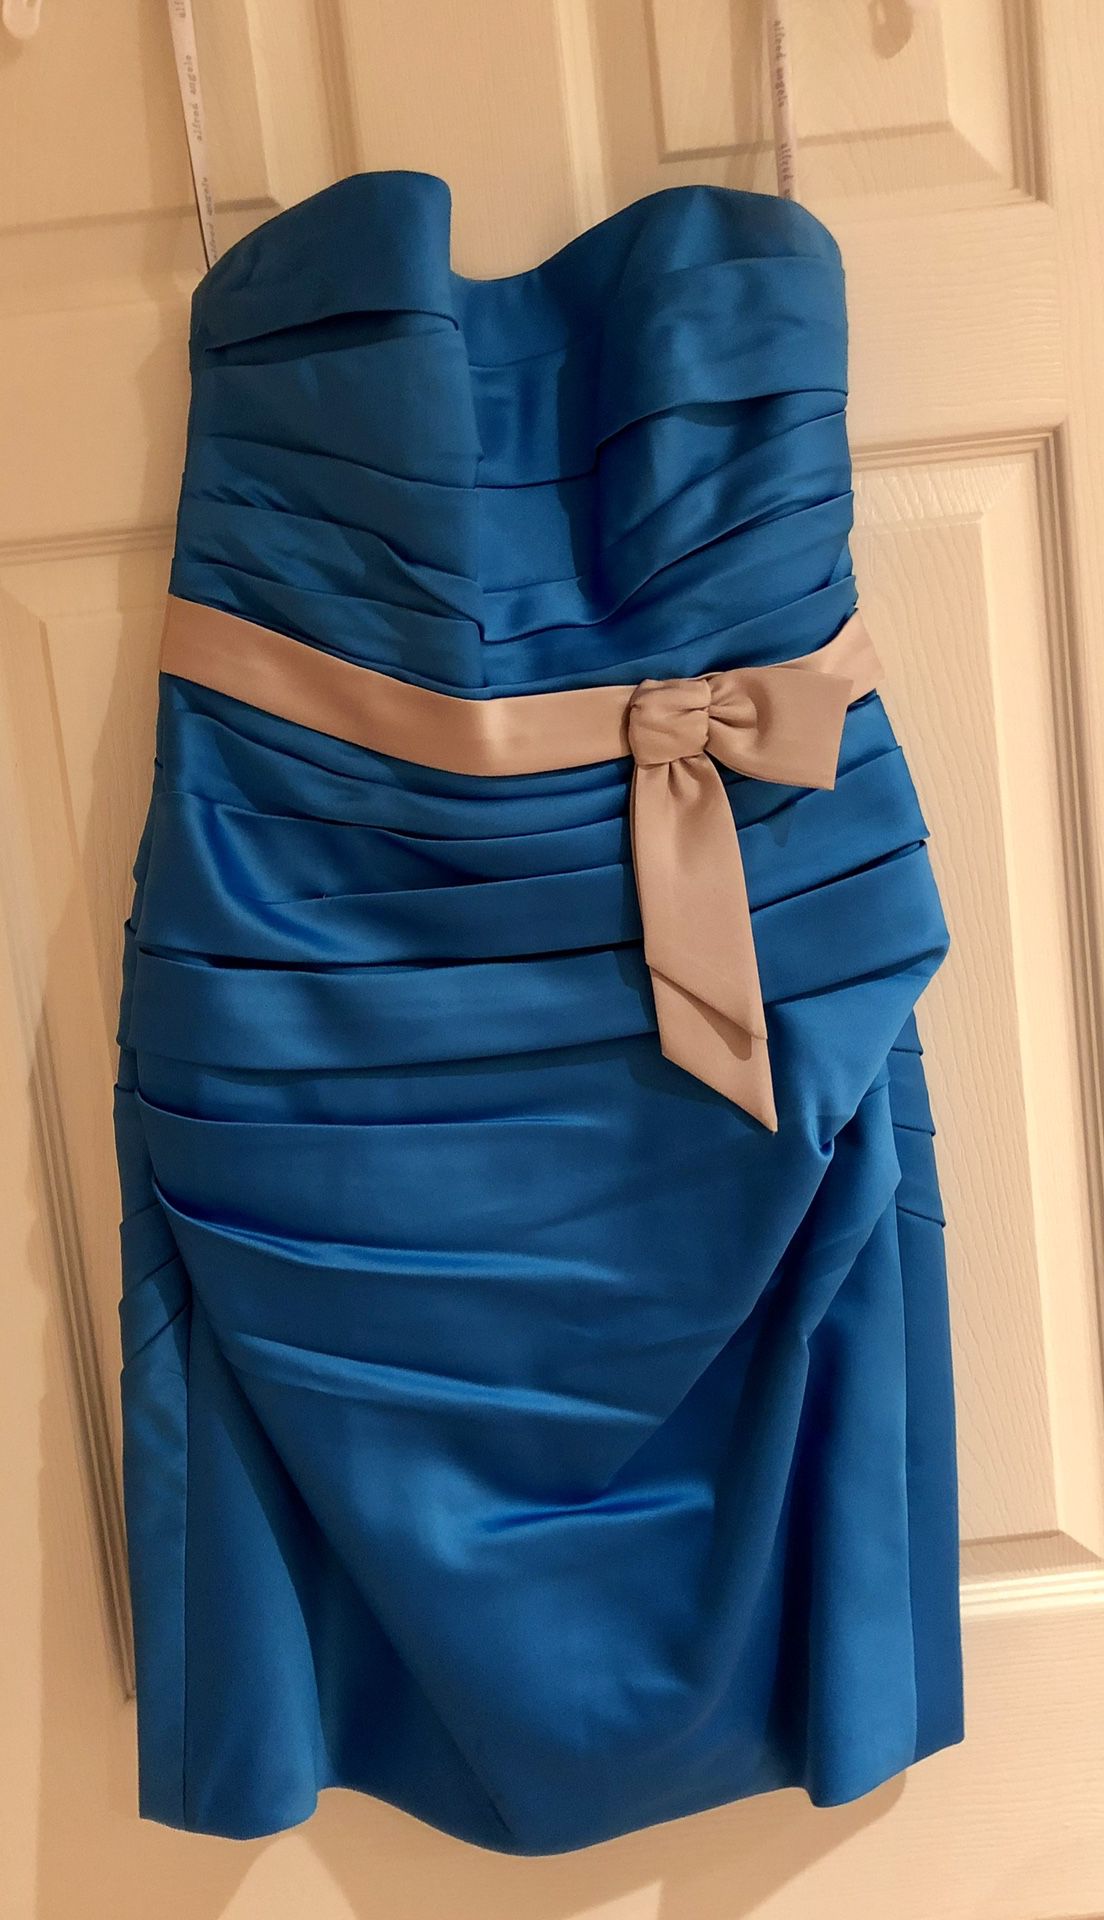 Marine Blue Strapless Cocktail Dress